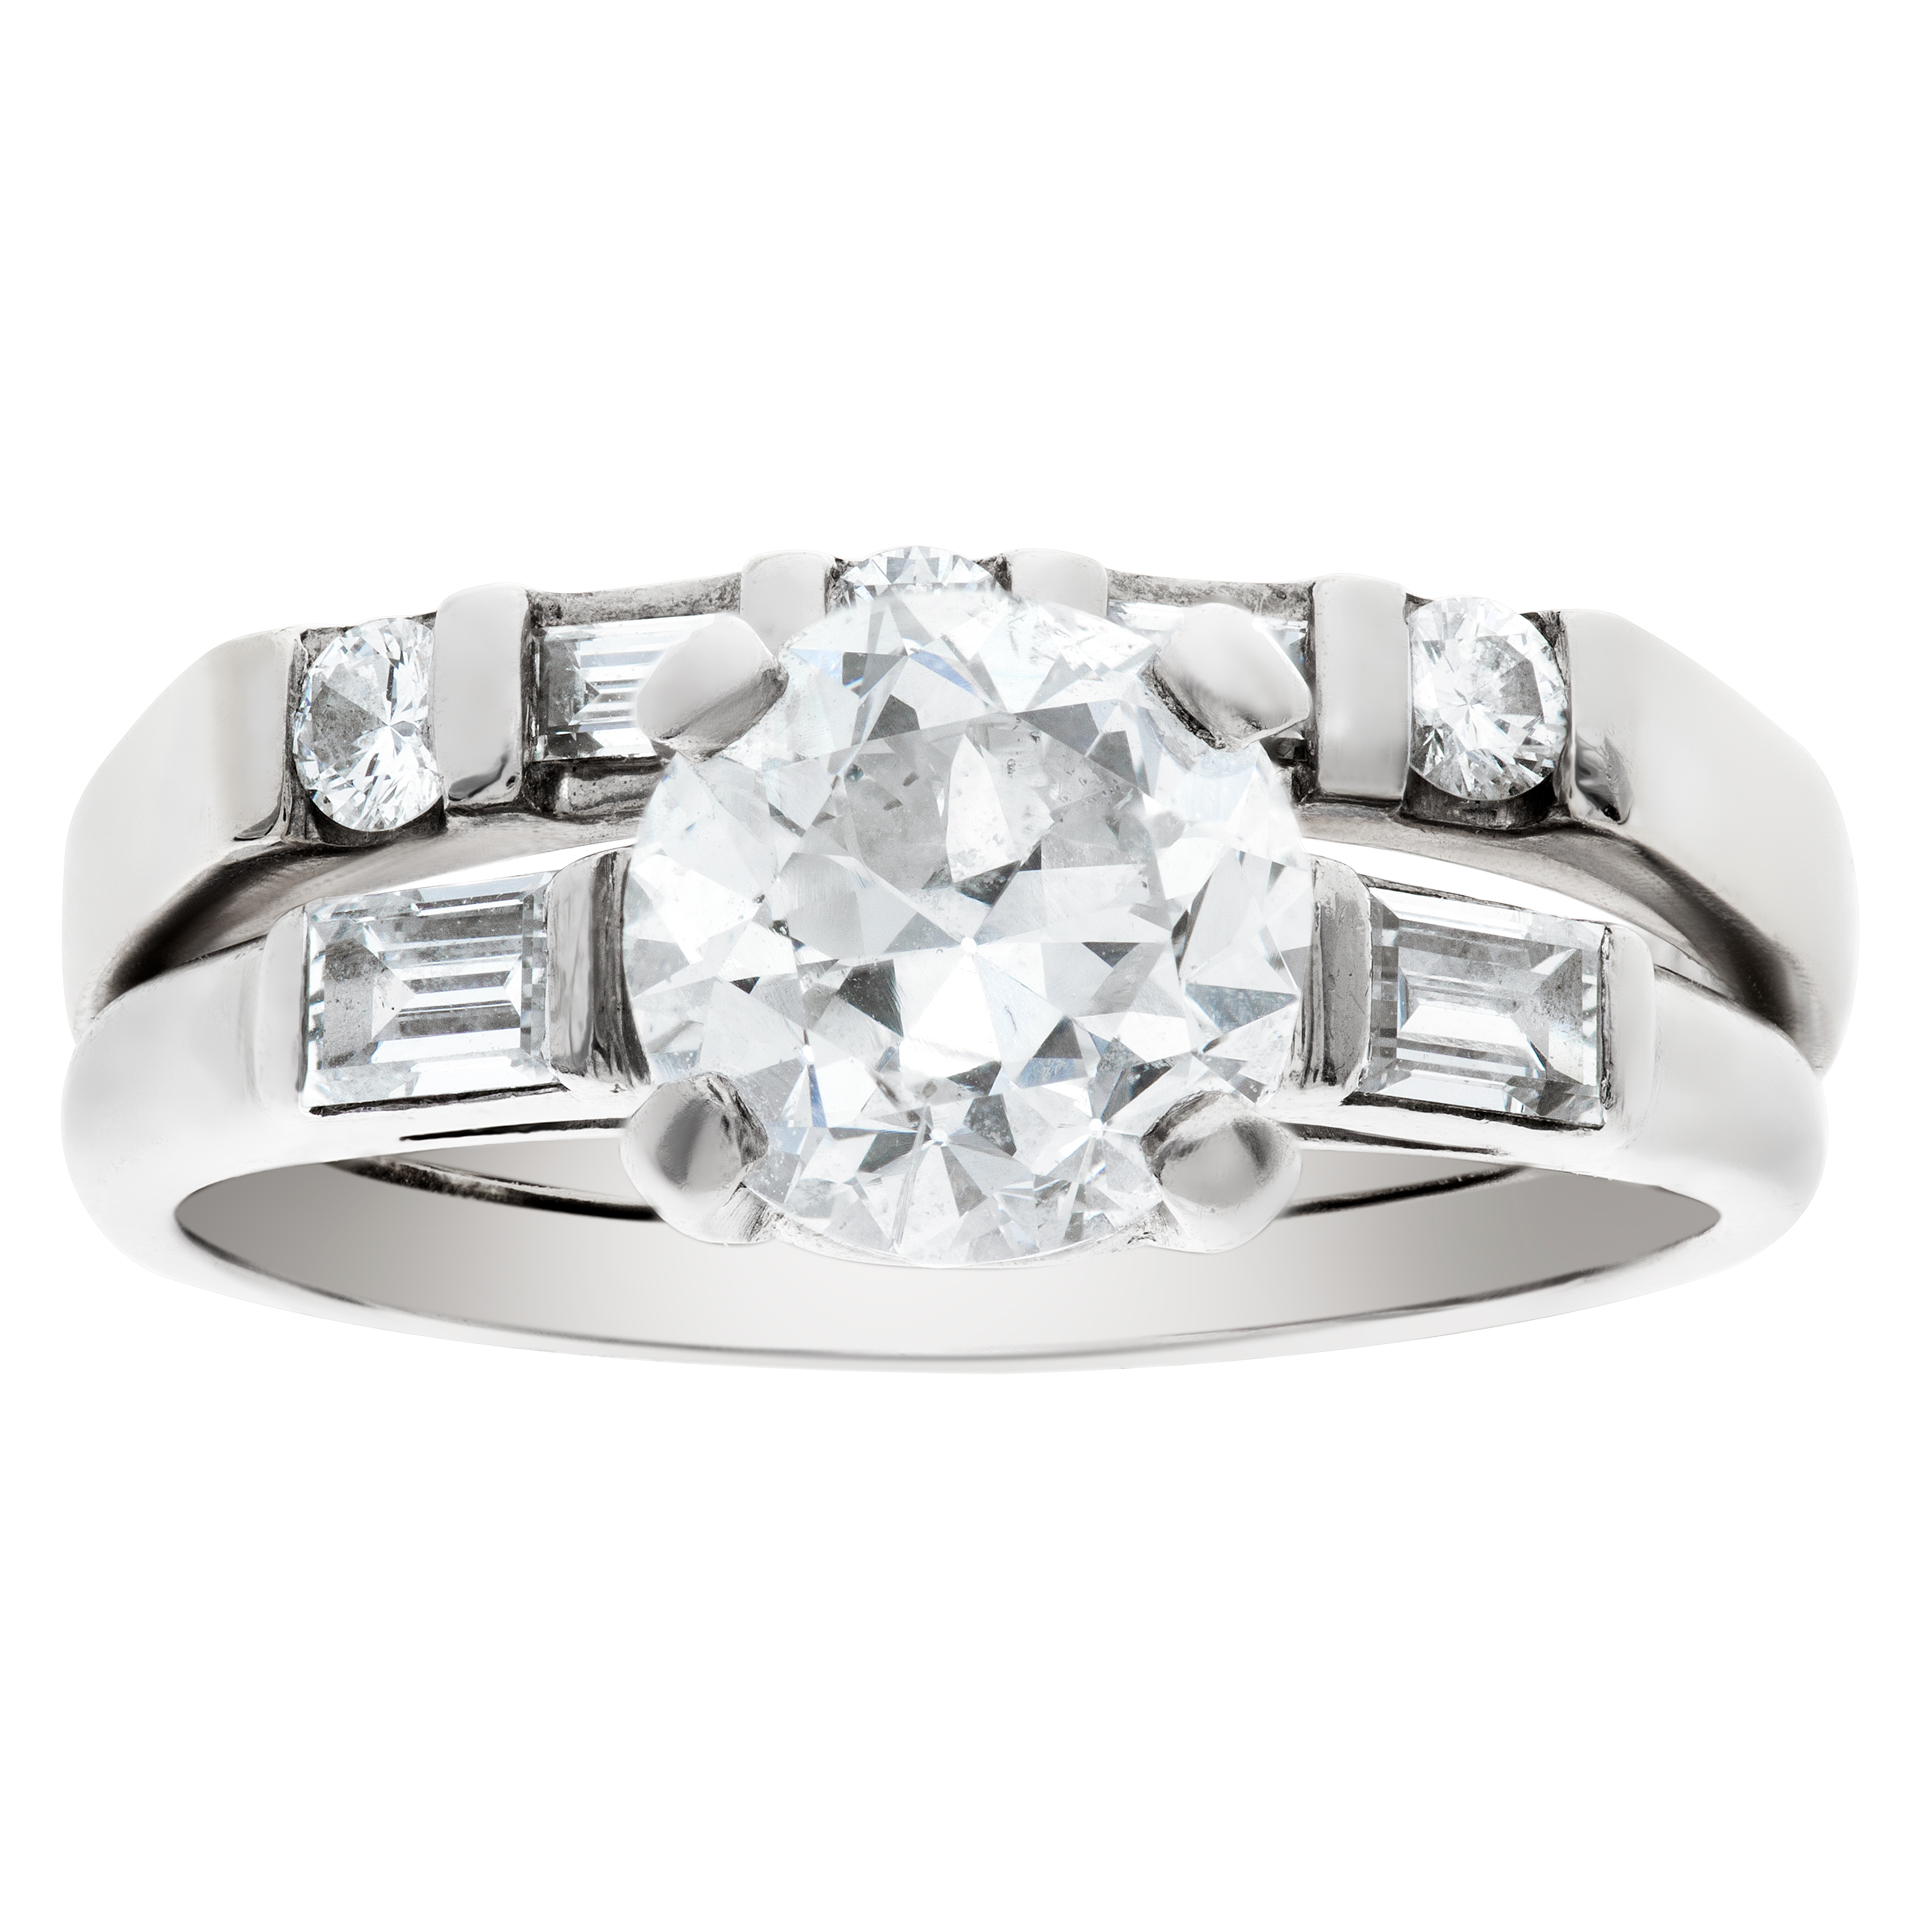 European-cut diamond ring. 1.2 cts center diamond (J color, I1 clarity) in 14k white gold image 1